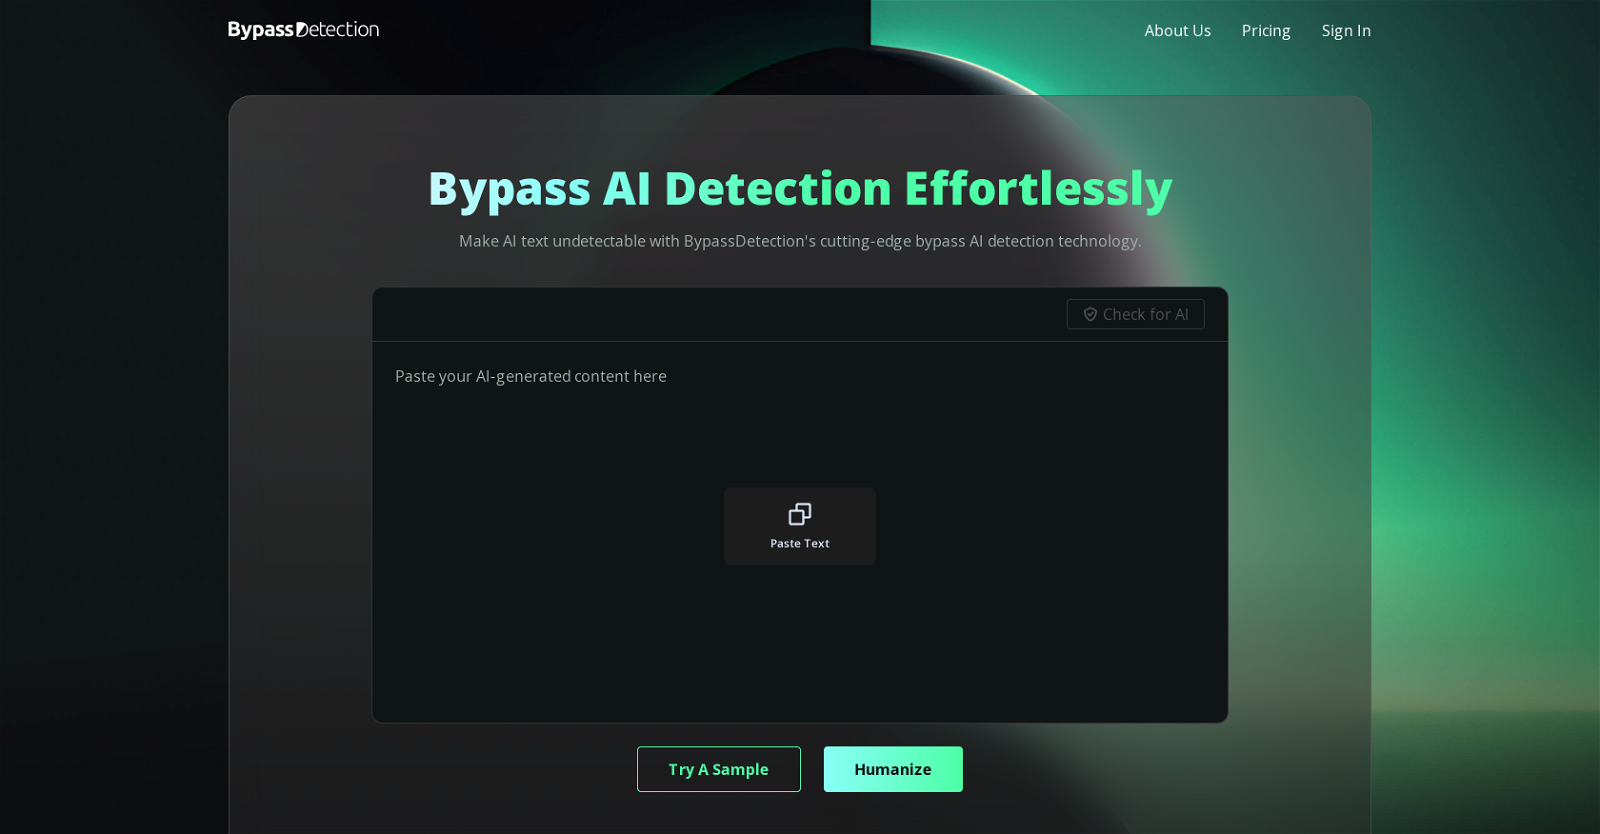 BypassDetection website